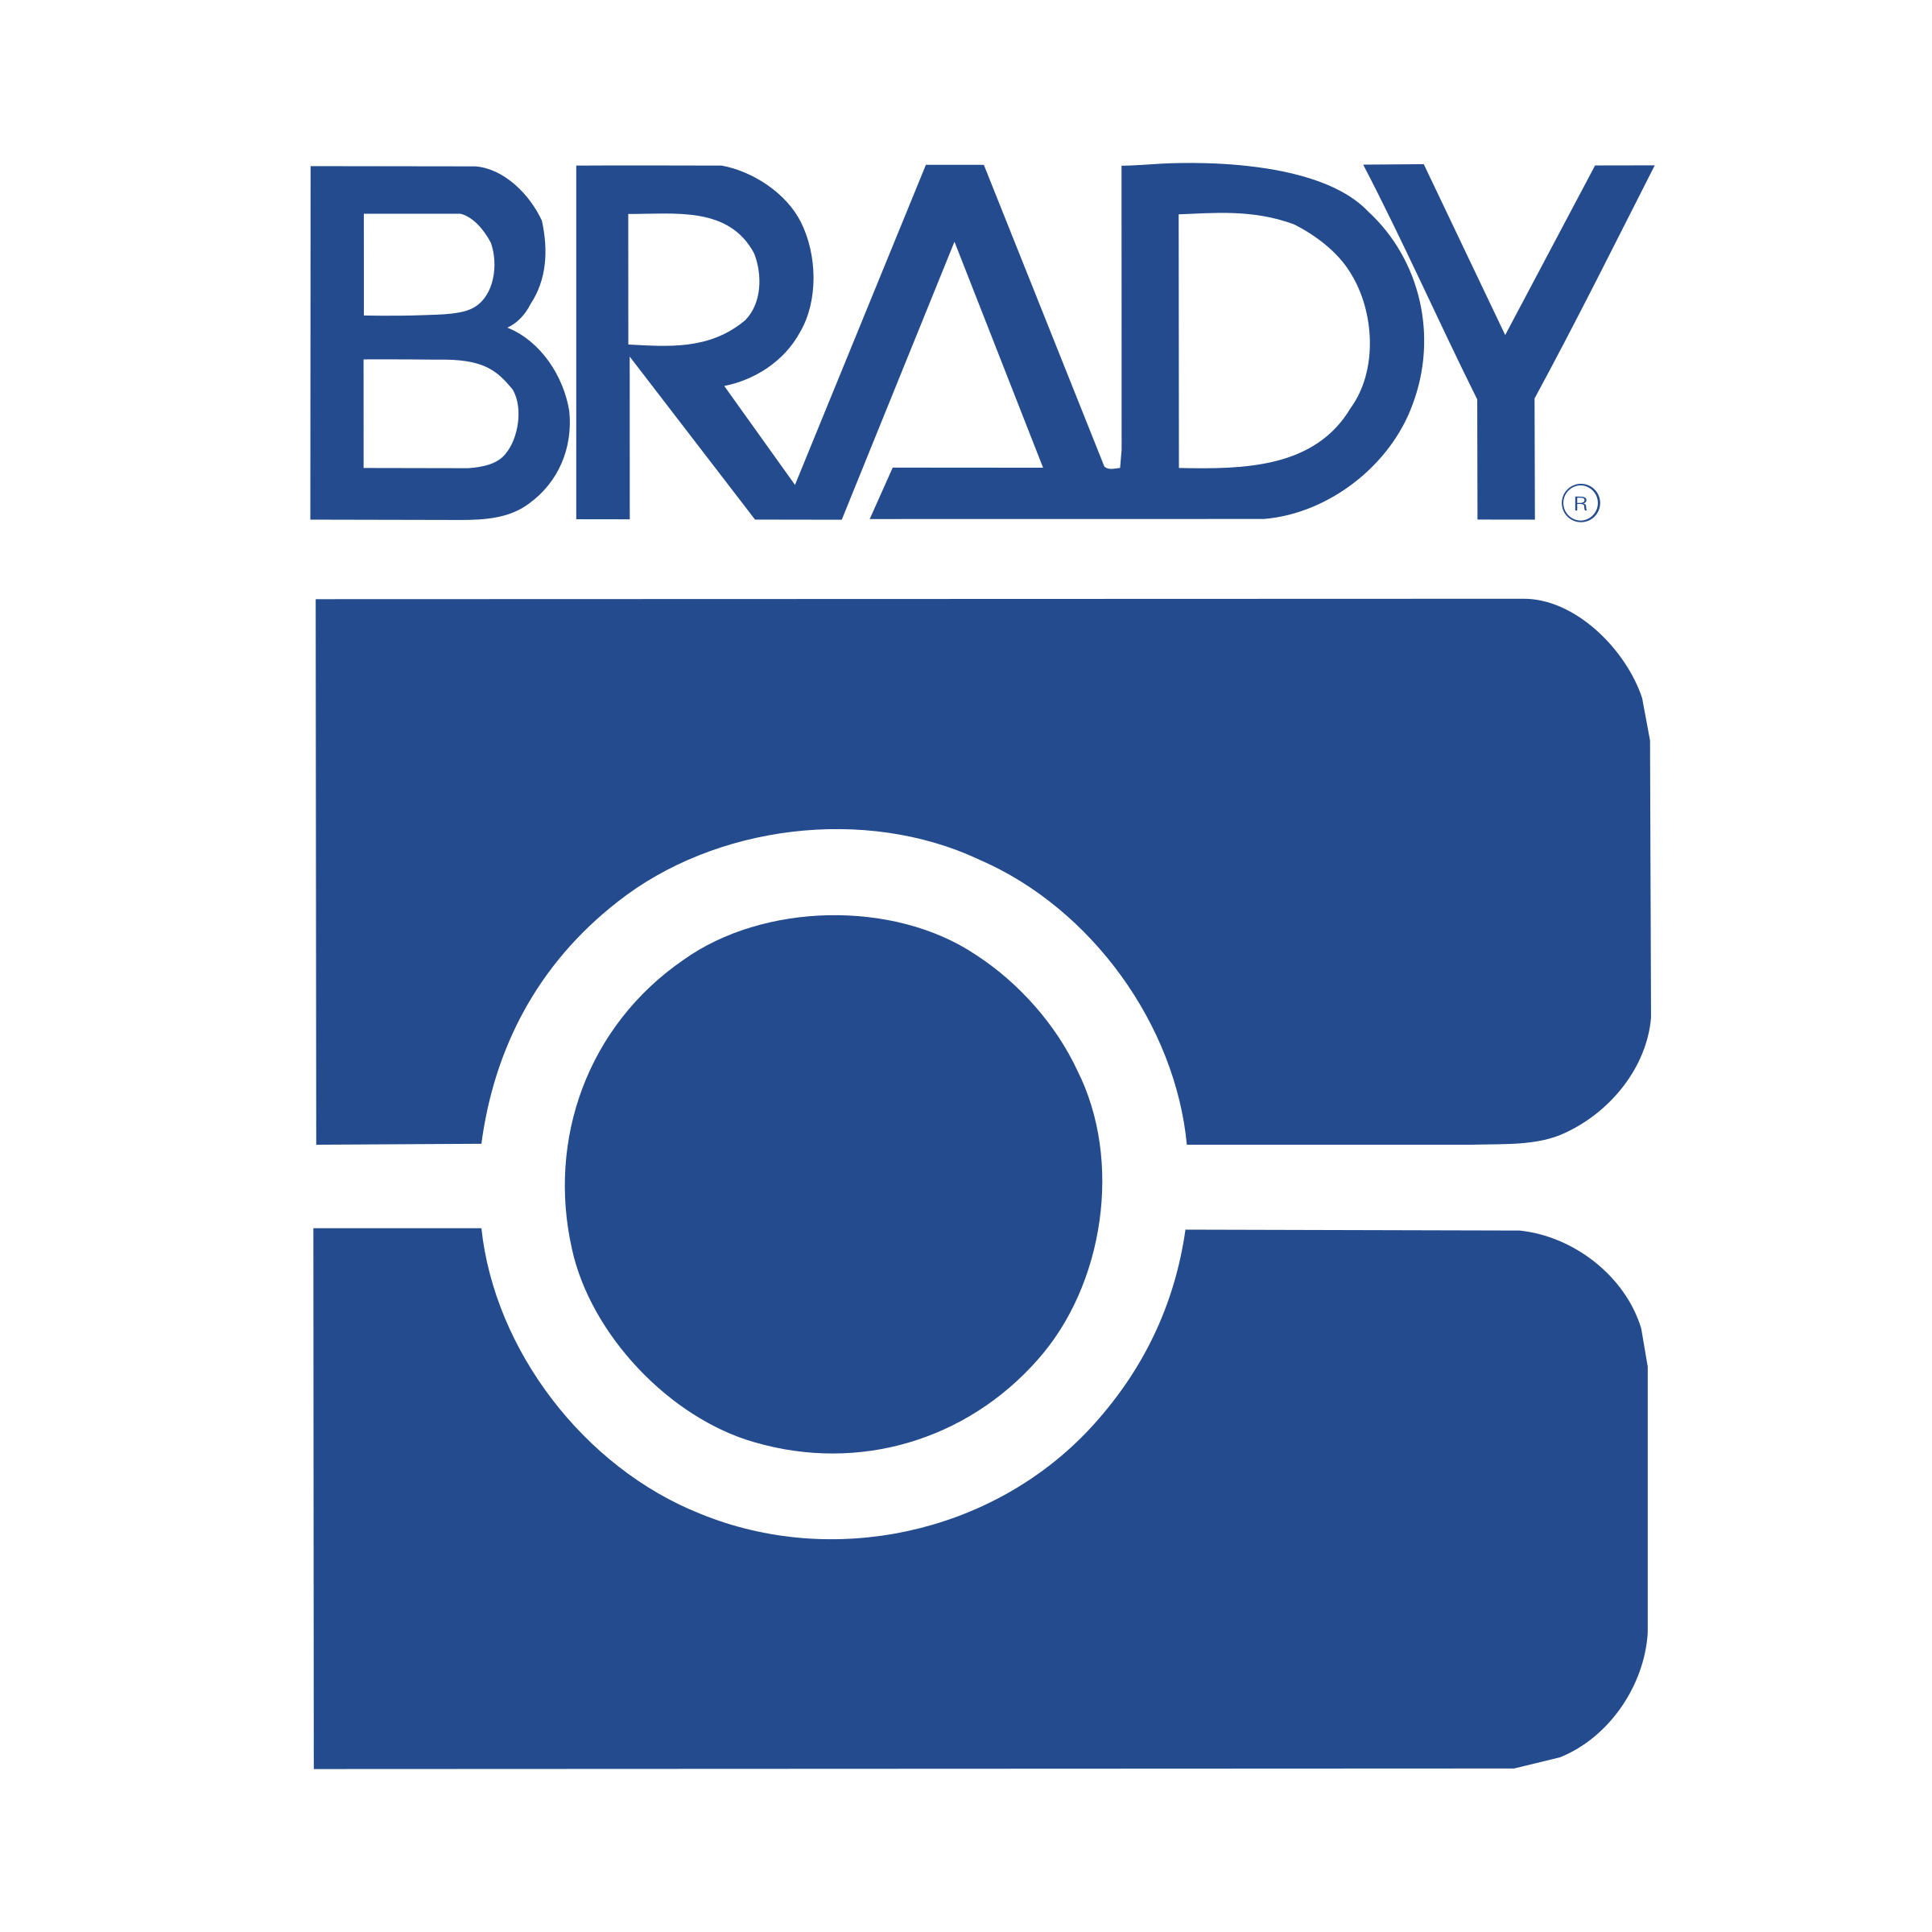 brady 3 logo png transparent